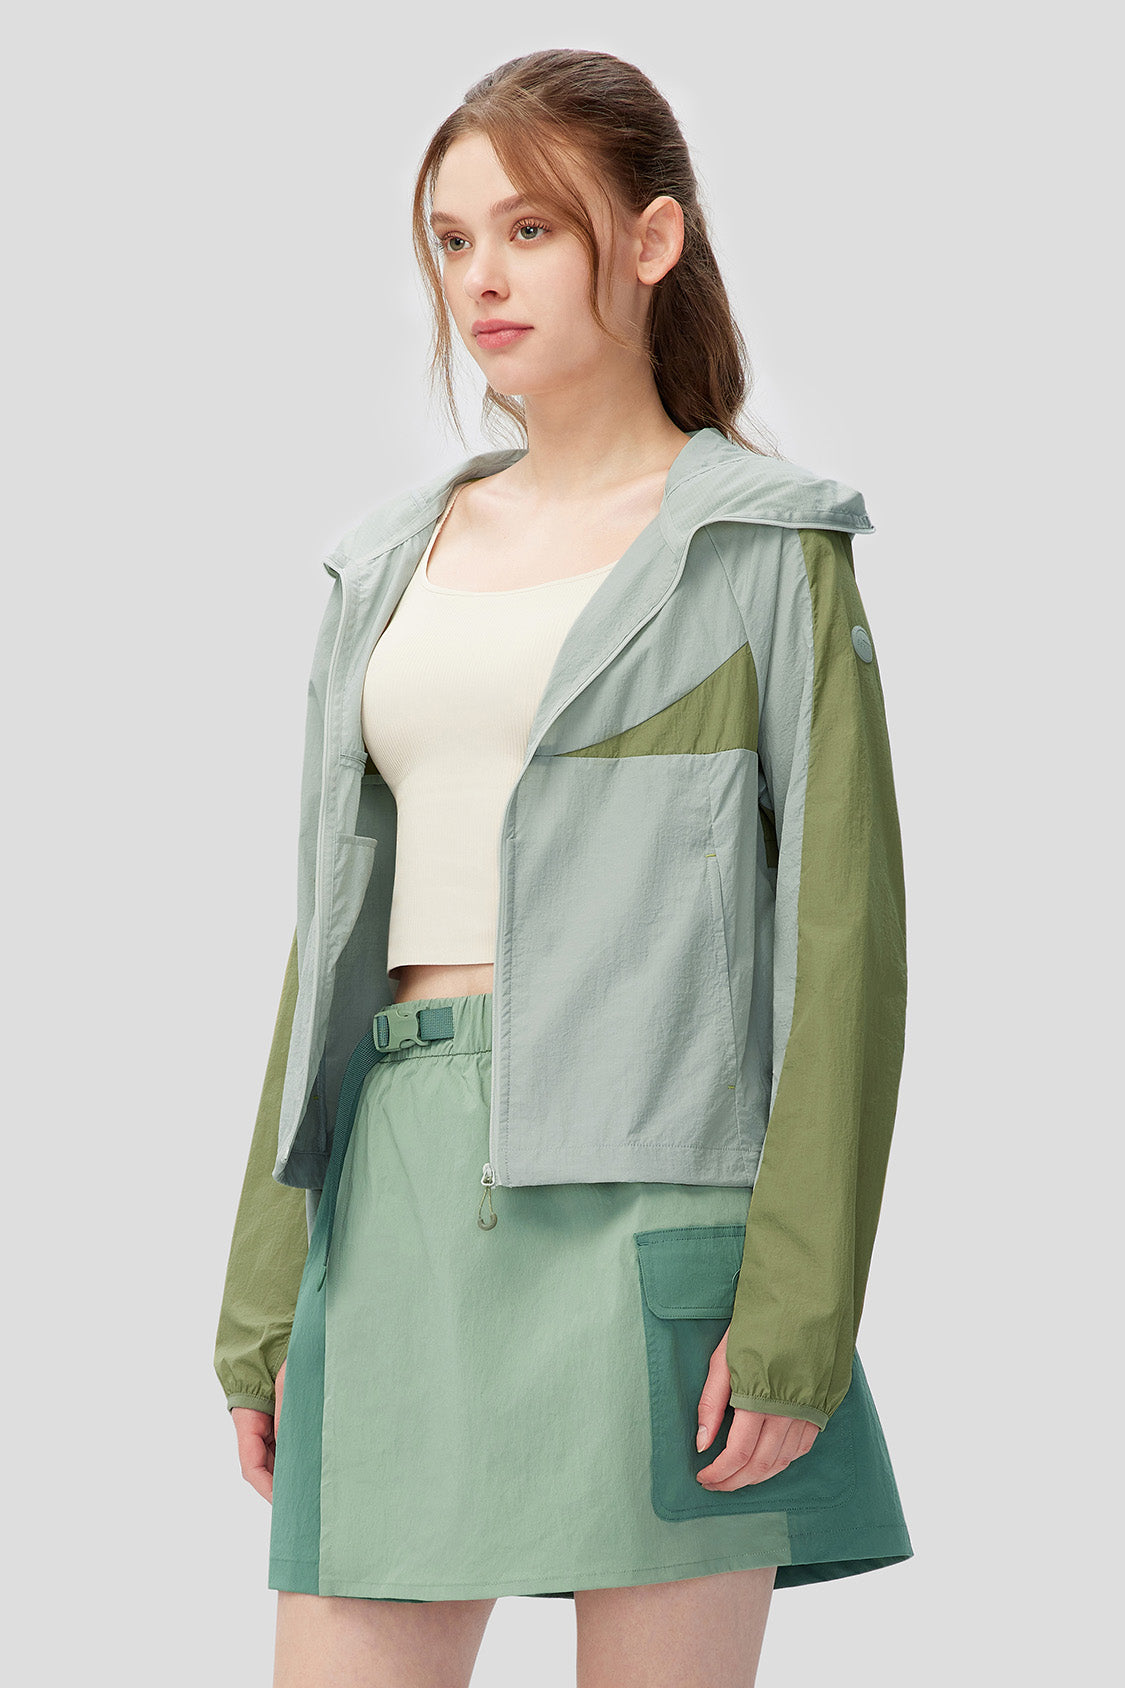 beneunder women's sun protection jacket upf50+ #color_light grayish green - wild meadow green